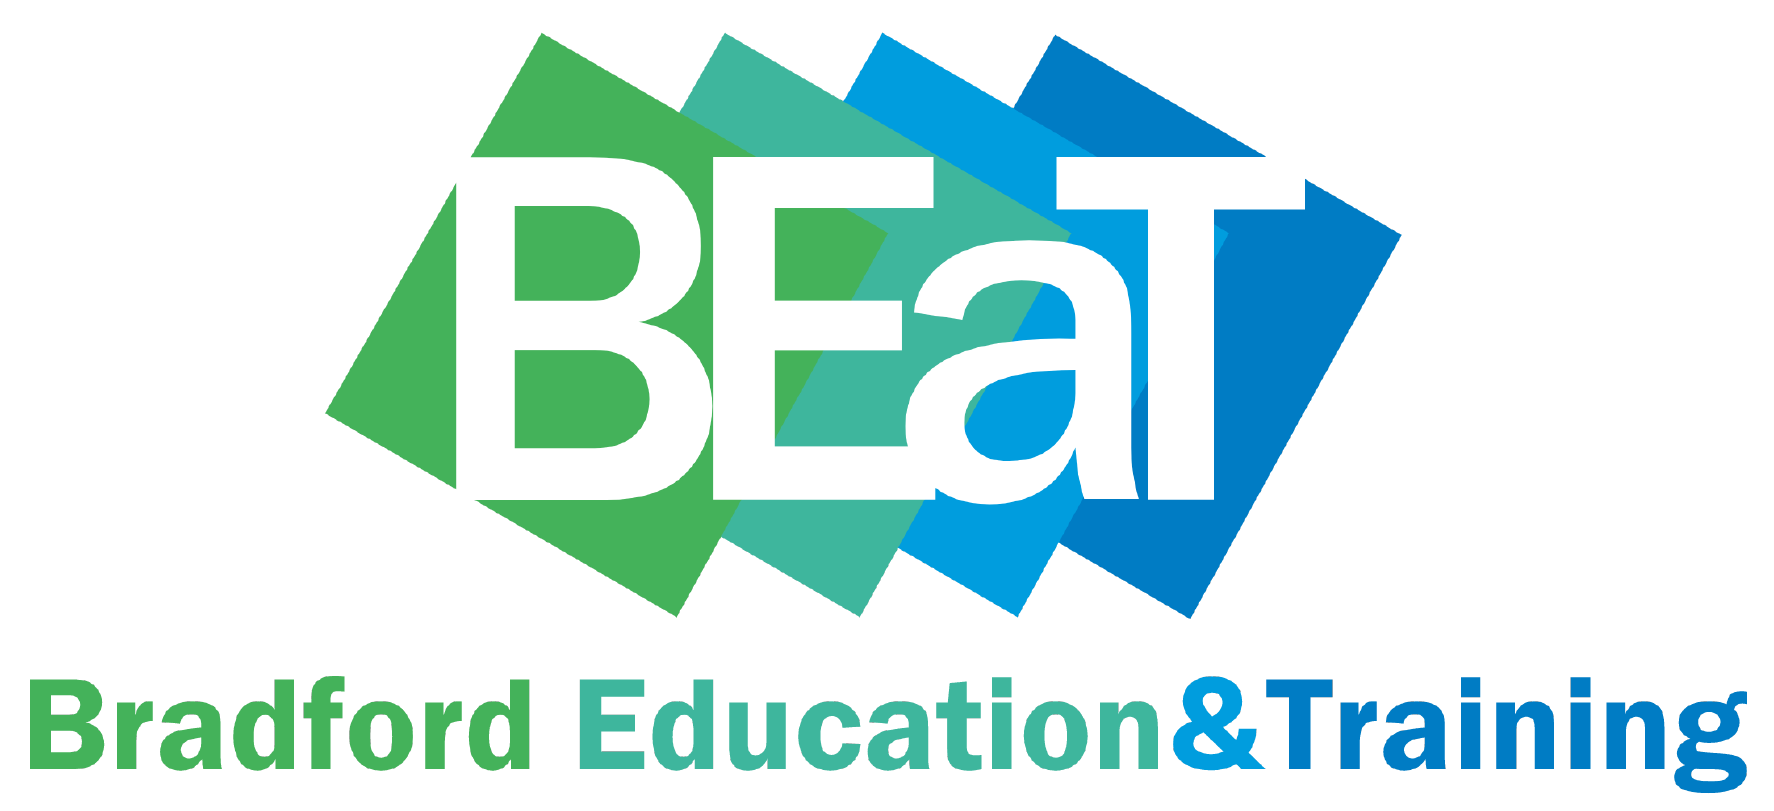 Bradford Education and Training